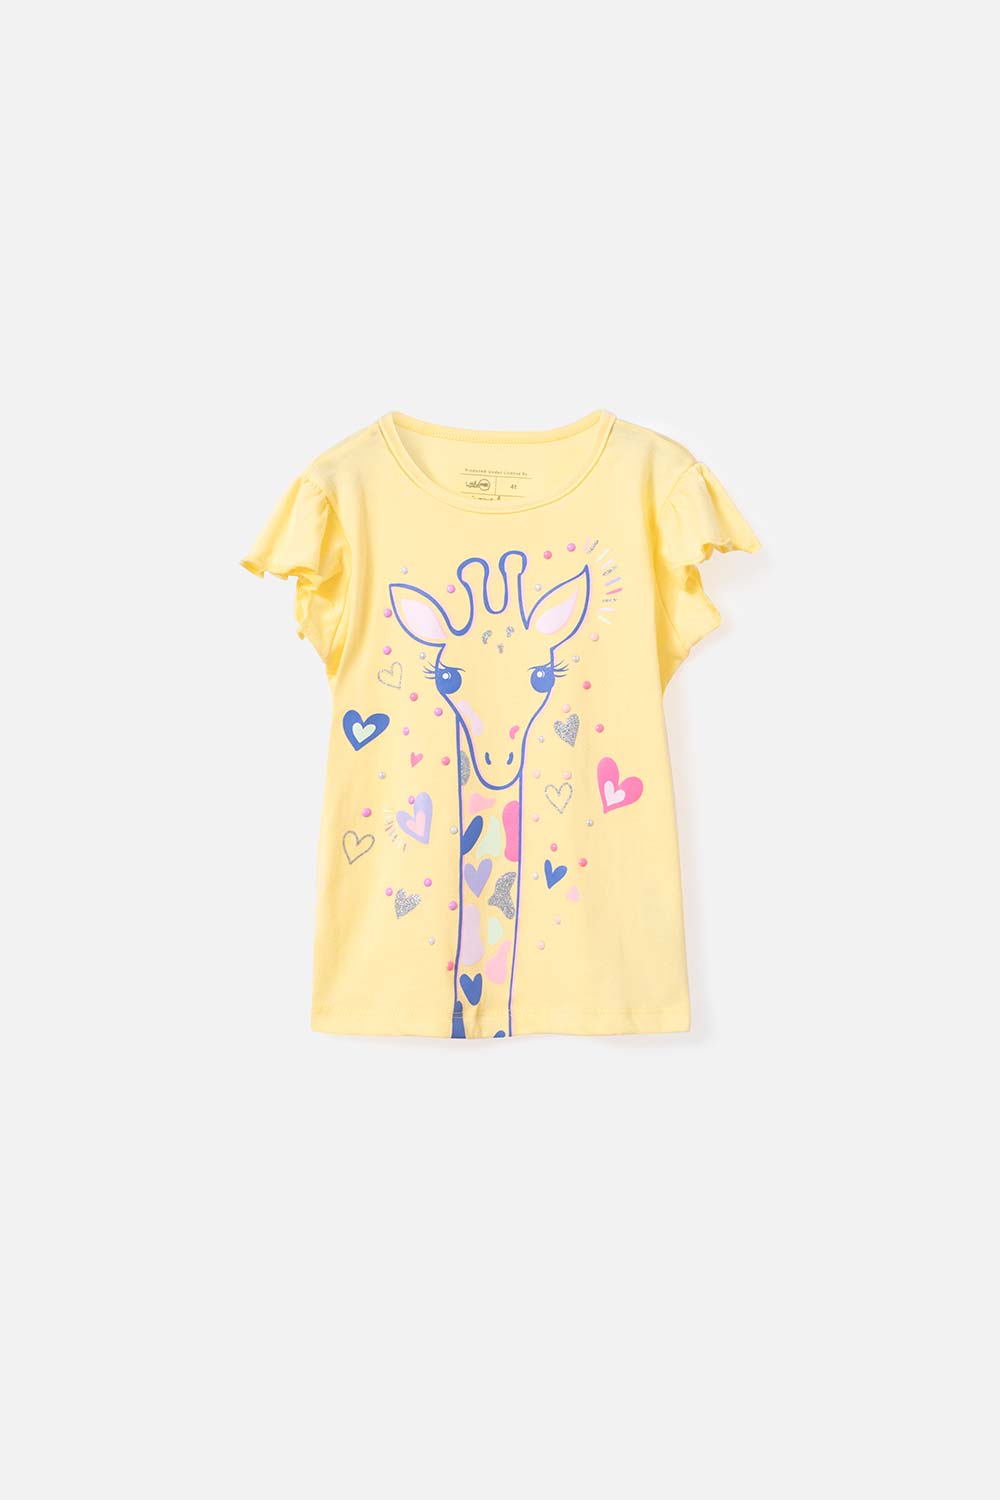 Camiseta LittleMic manga corta amarilla para niña 2T a 5T